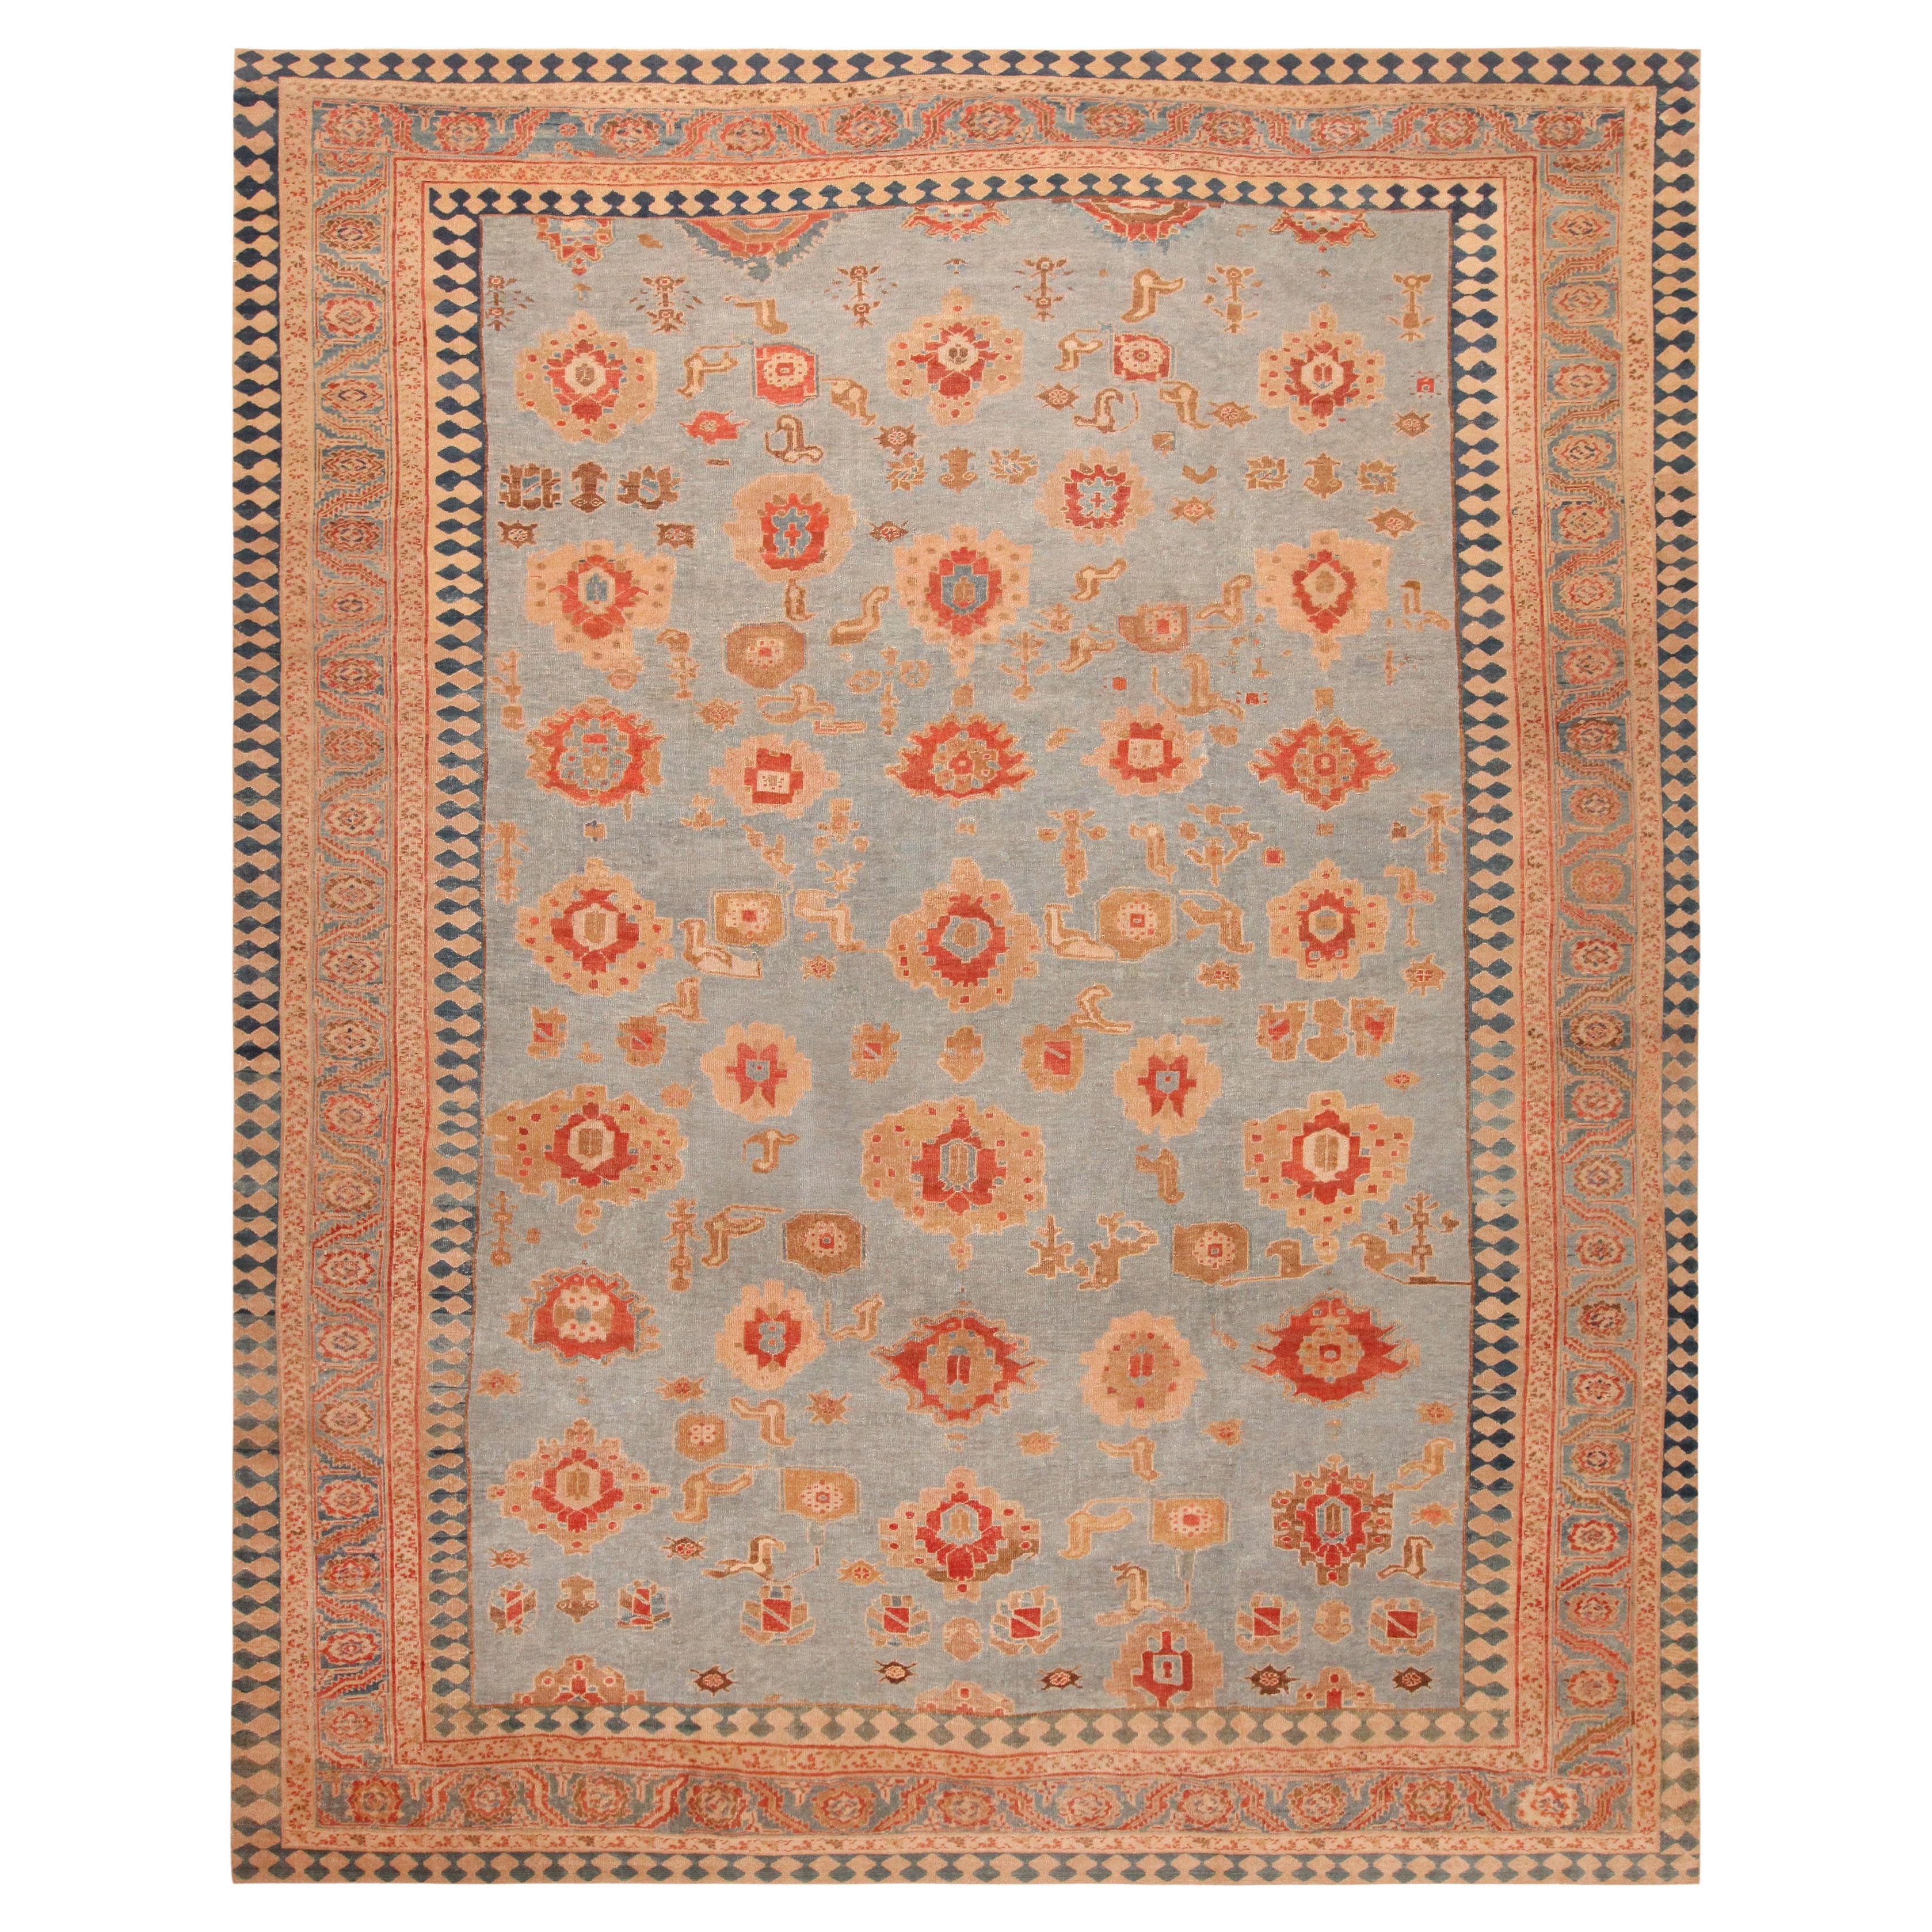 Antiker persischer Stammeskunst-Teppich in Bakshaish-Optik. 12 ft x 14 ft 10 in